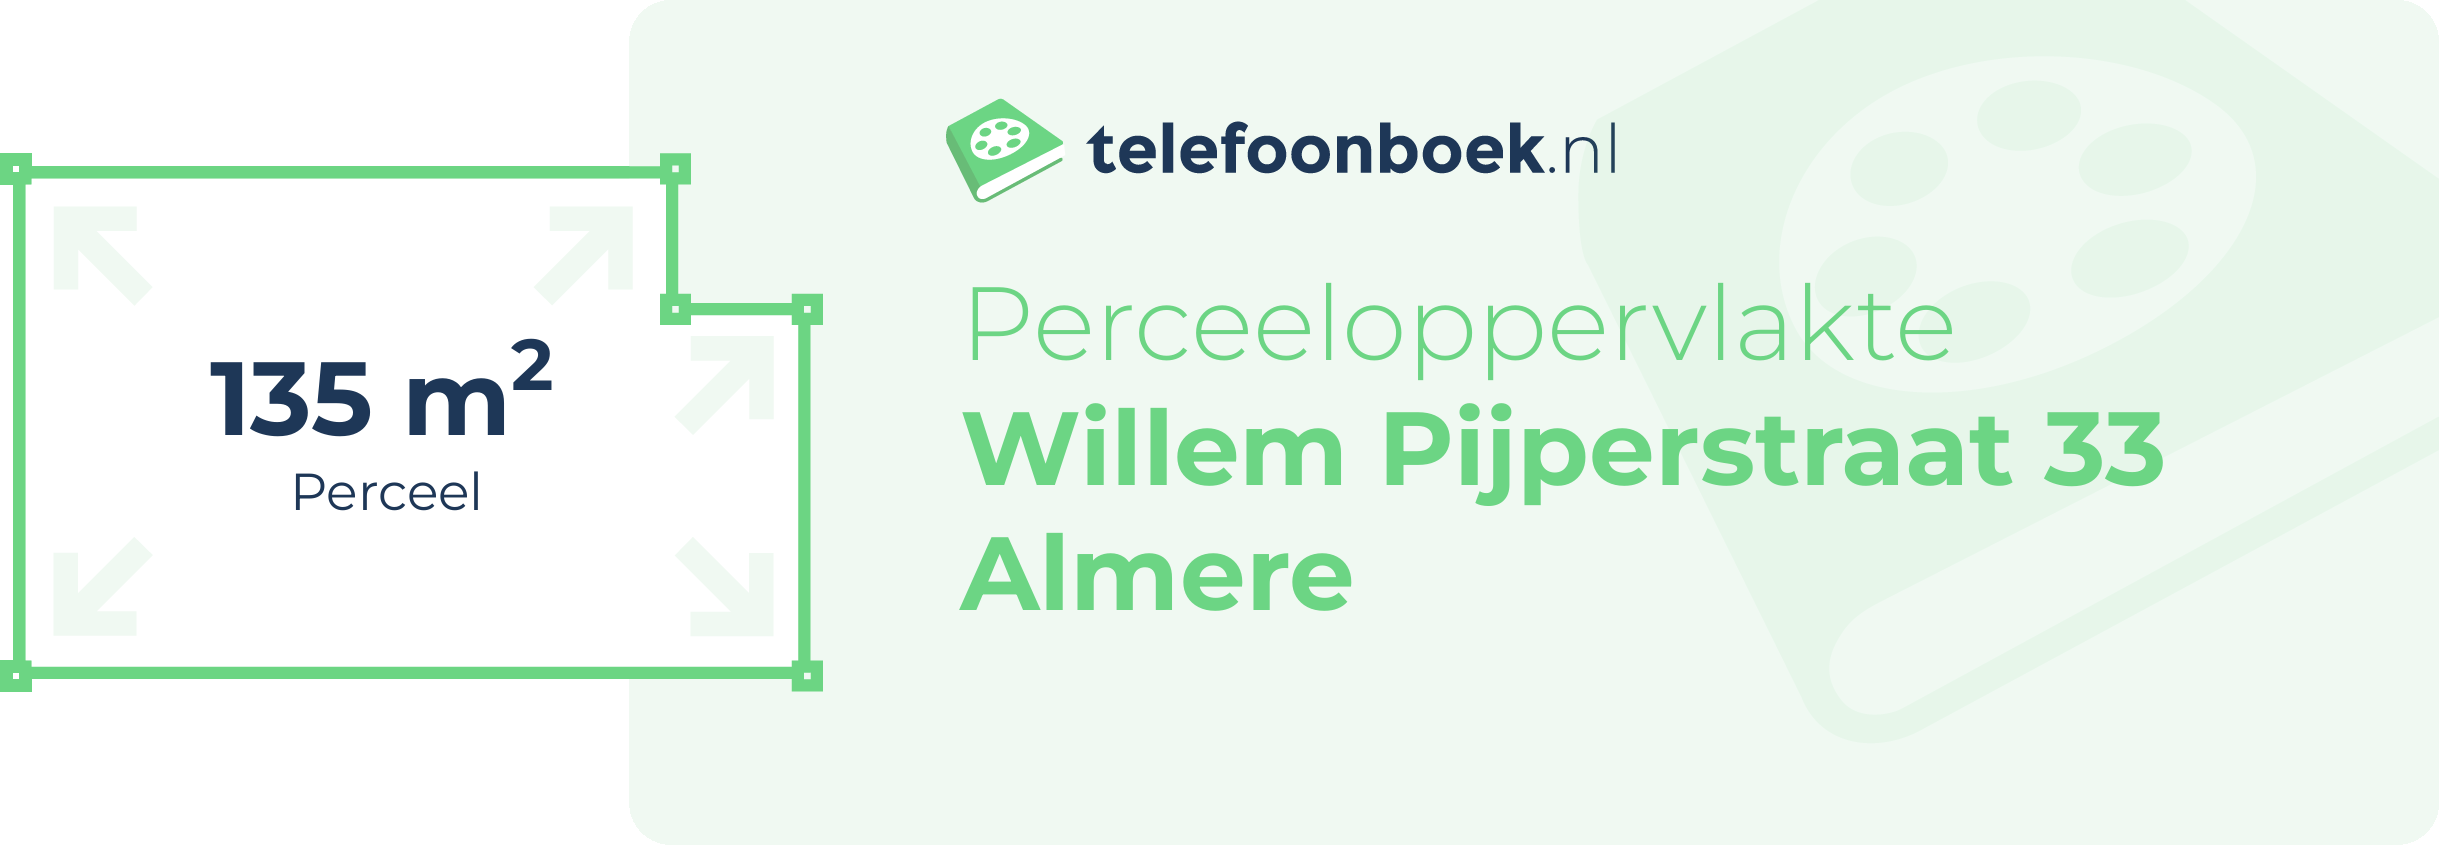 Perceeloppervlakte Willem Pijperstraat 33 Almere